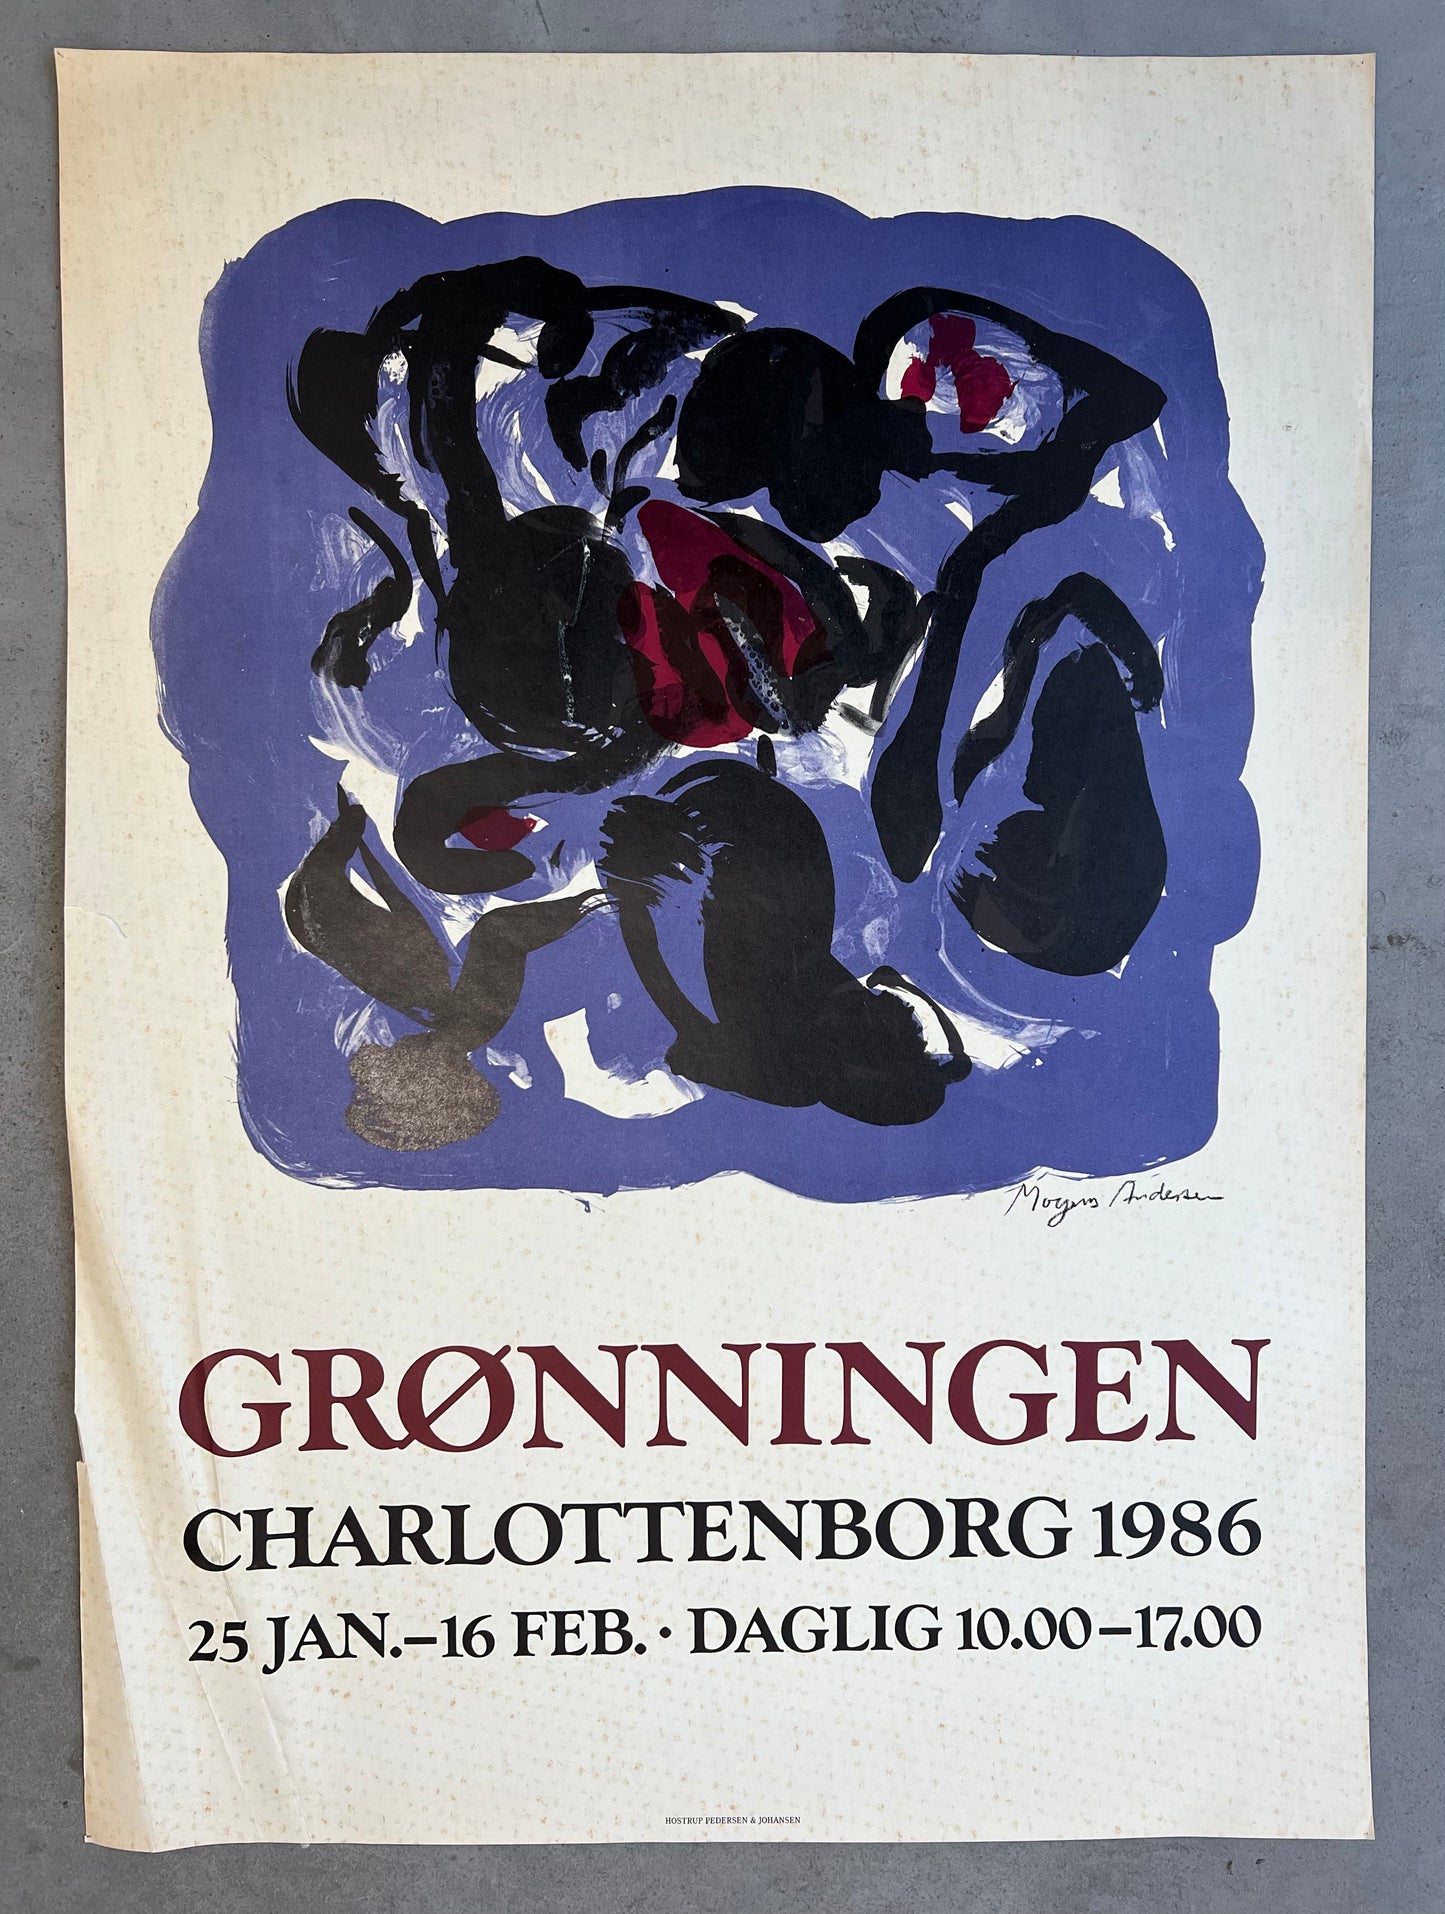 Mogens Andersen. "The Greening", 1986